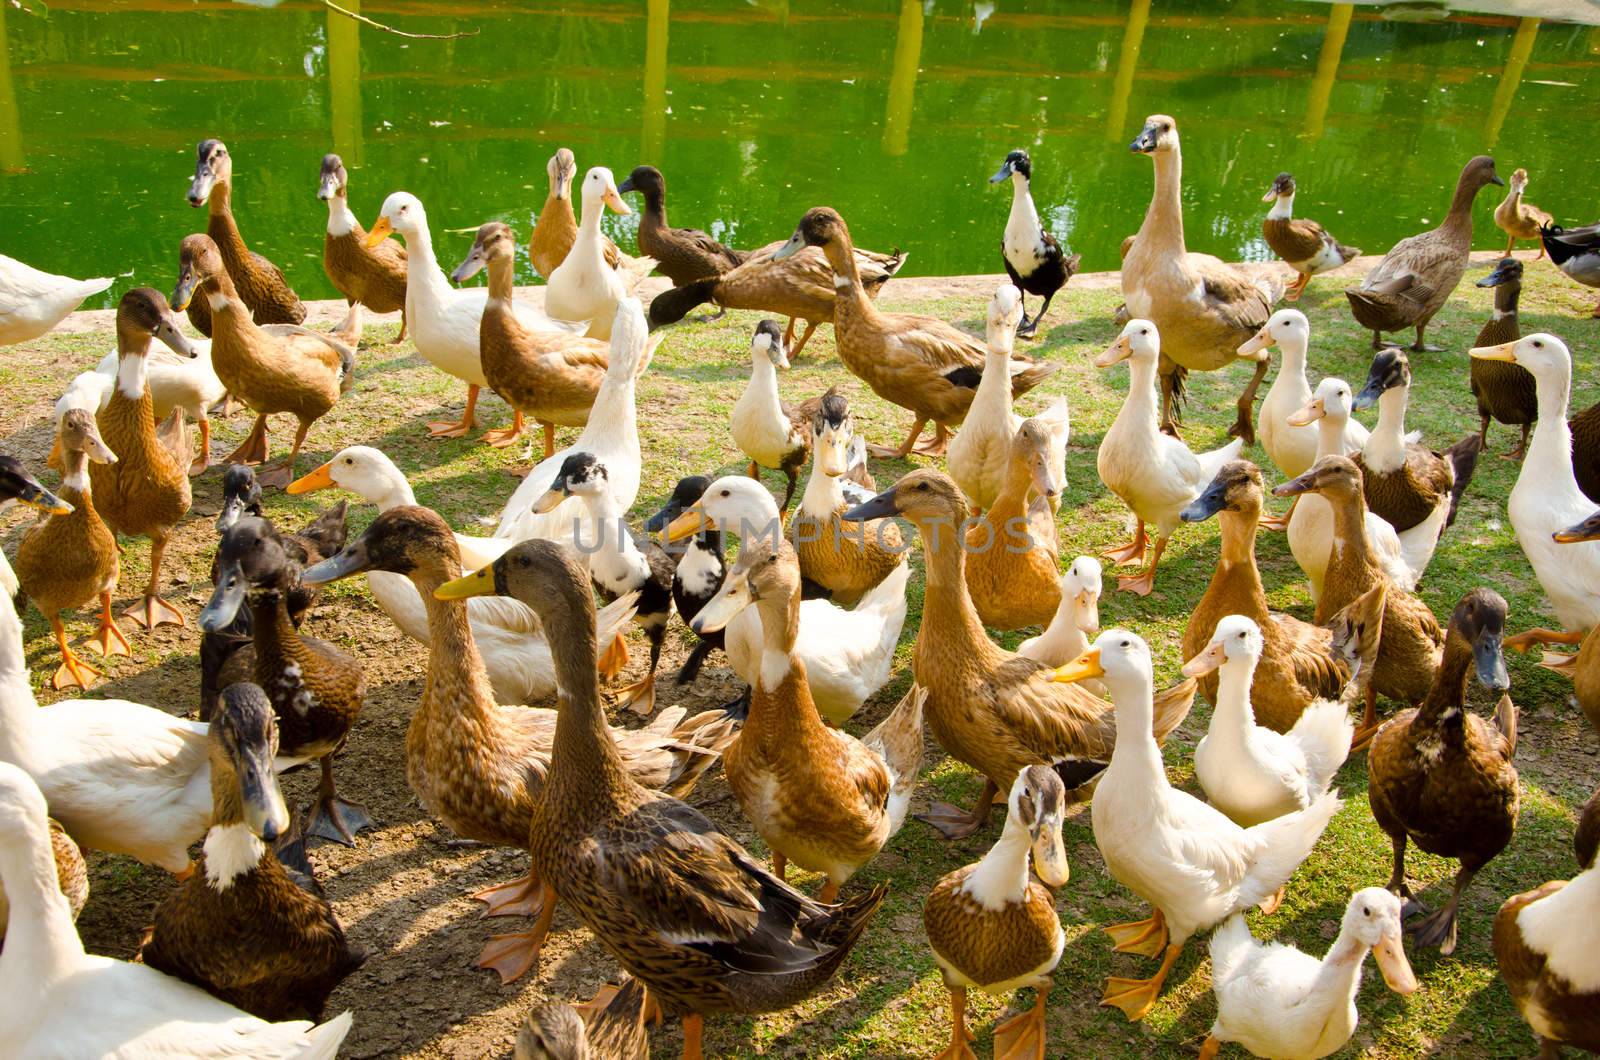 Many ducks near streams by Gamjai